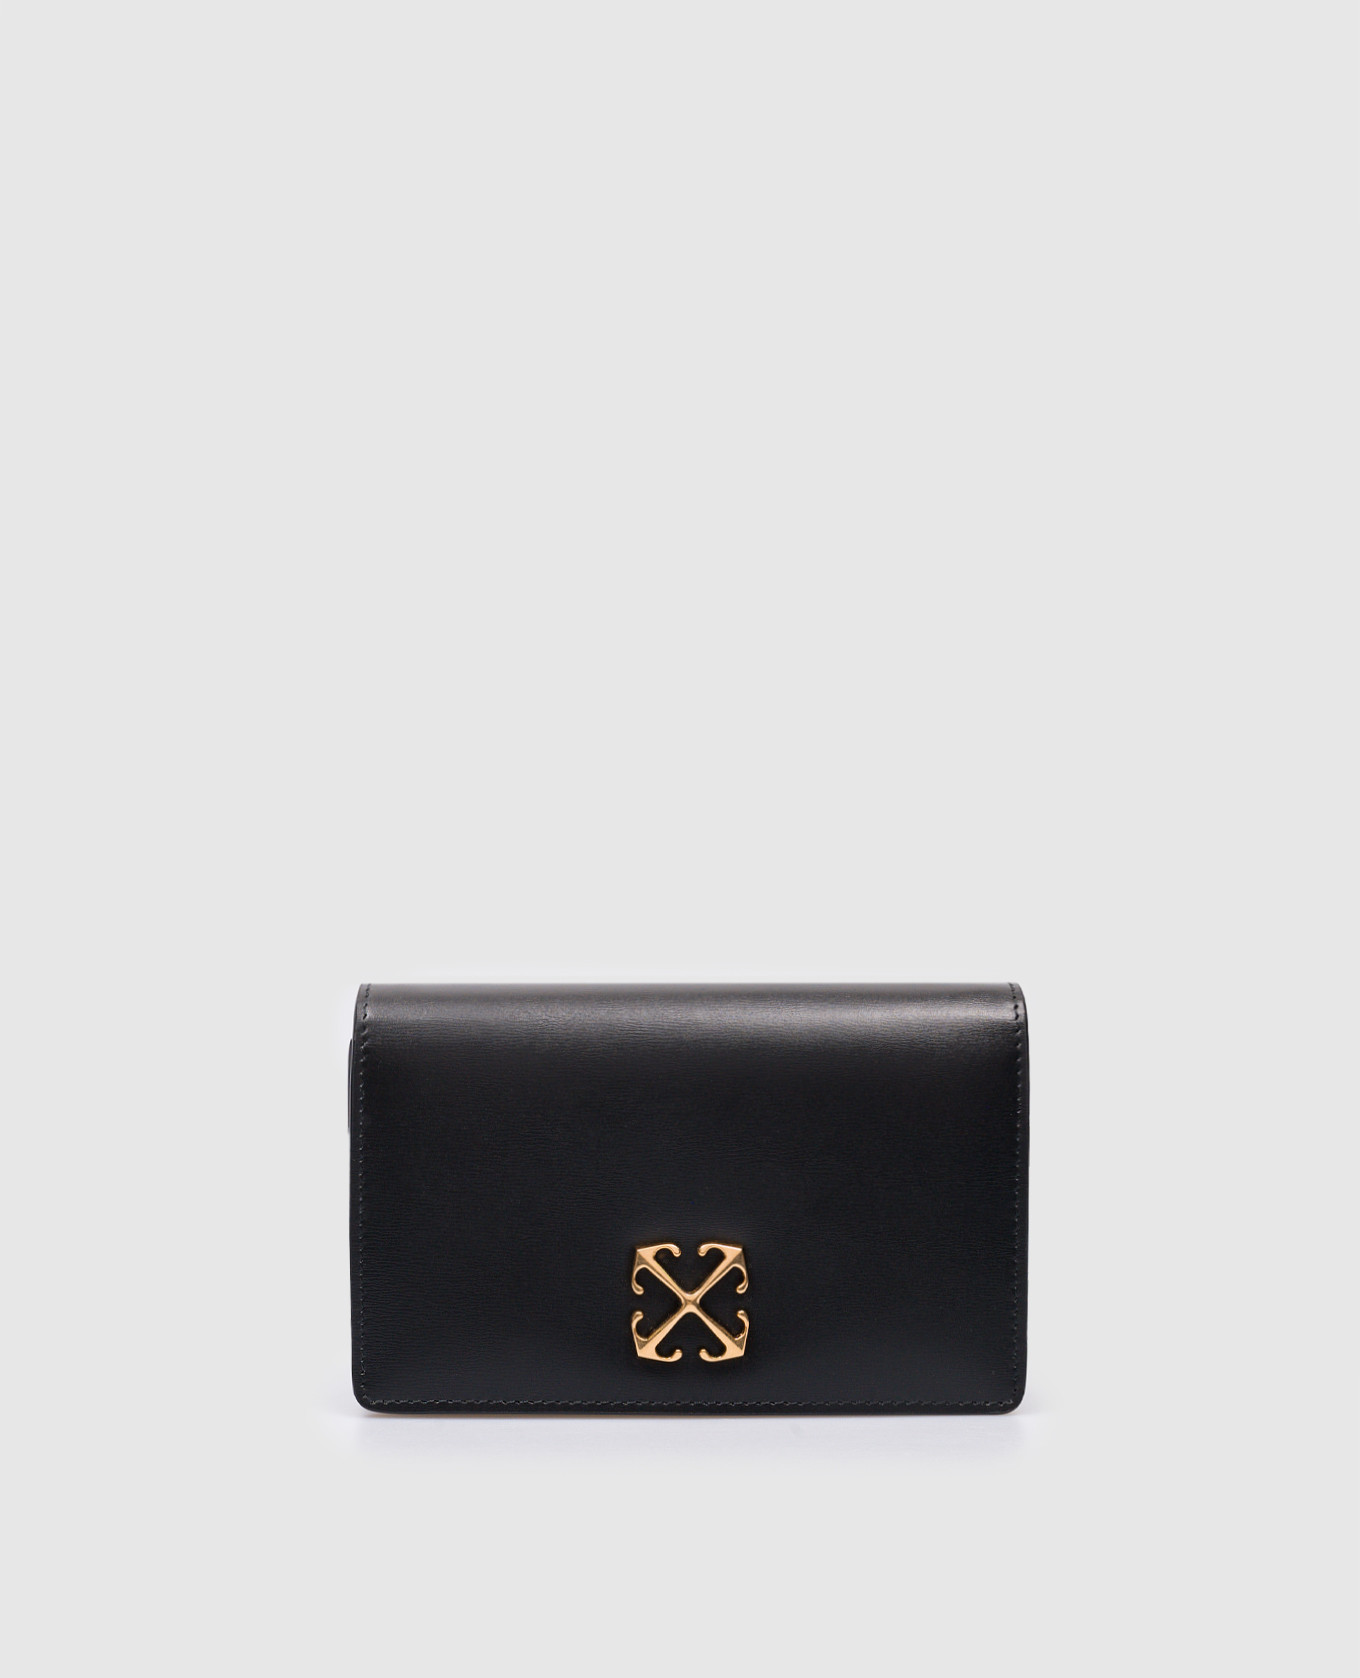 Black leather Jitney 0.5 bag with metal logo